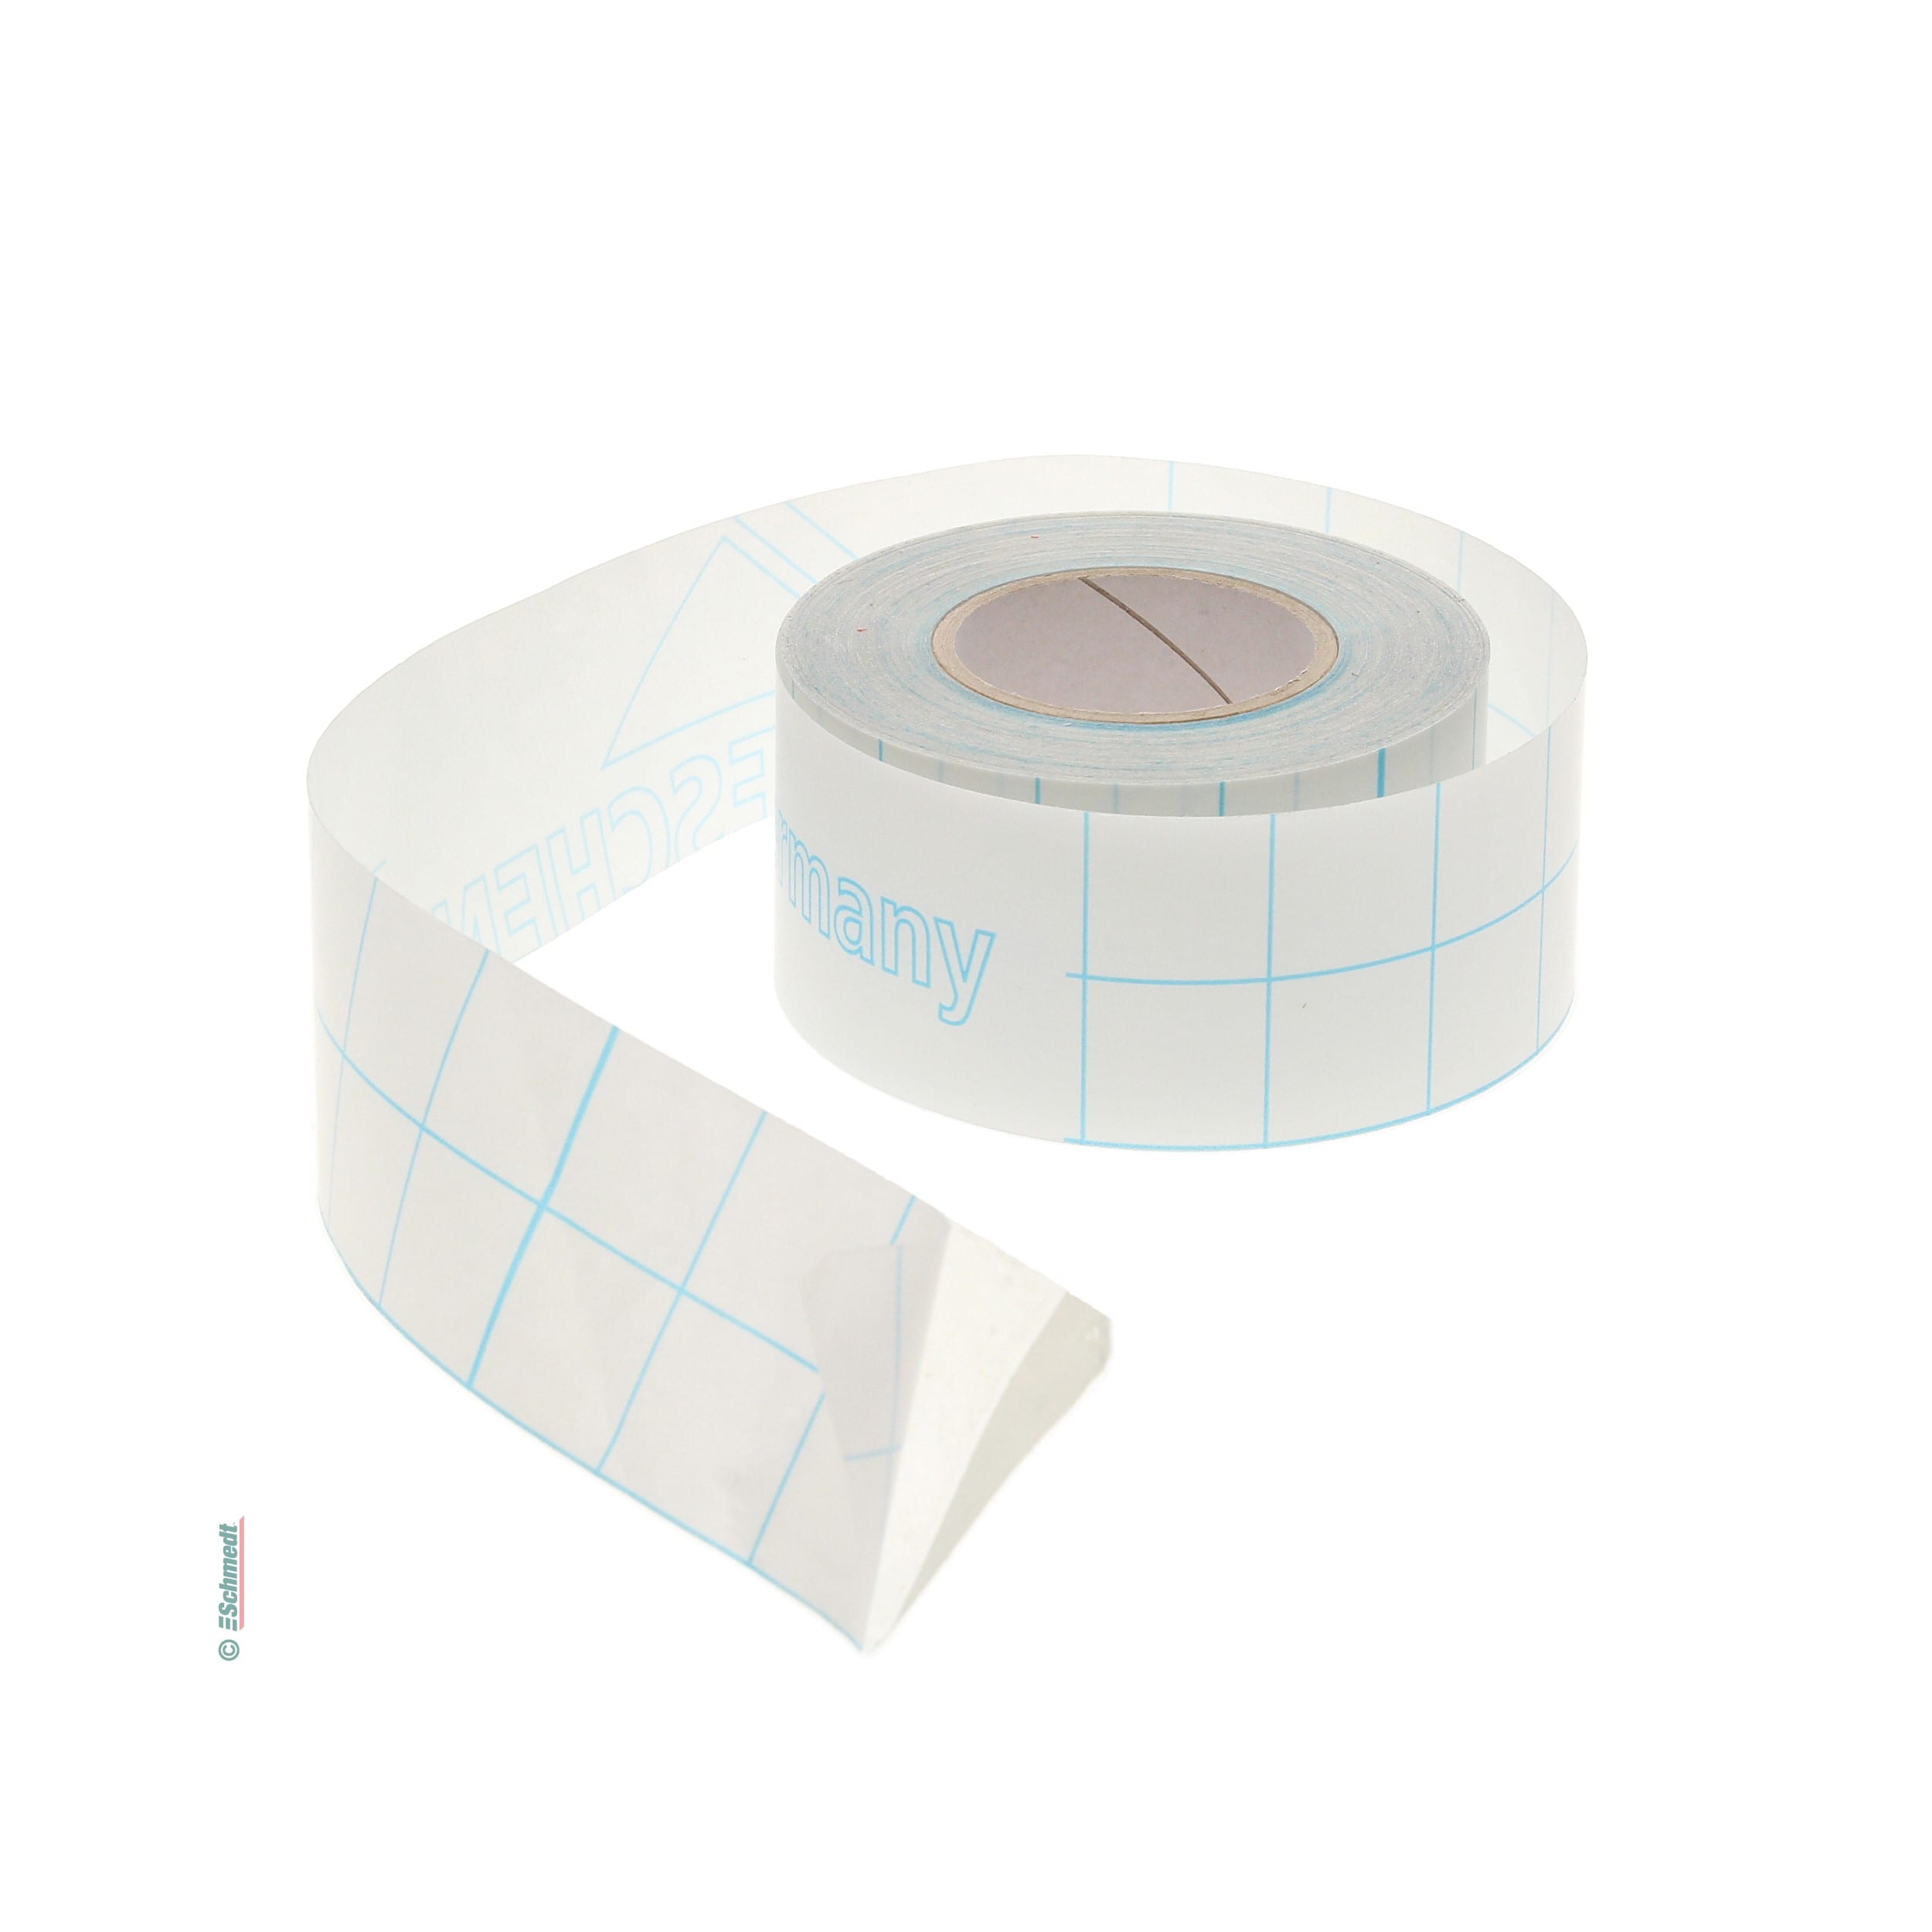 Filmolux 609 - protection film - self-adhesive, pre-cut label protection - on rolls - Label protection, e. g. barcodes...